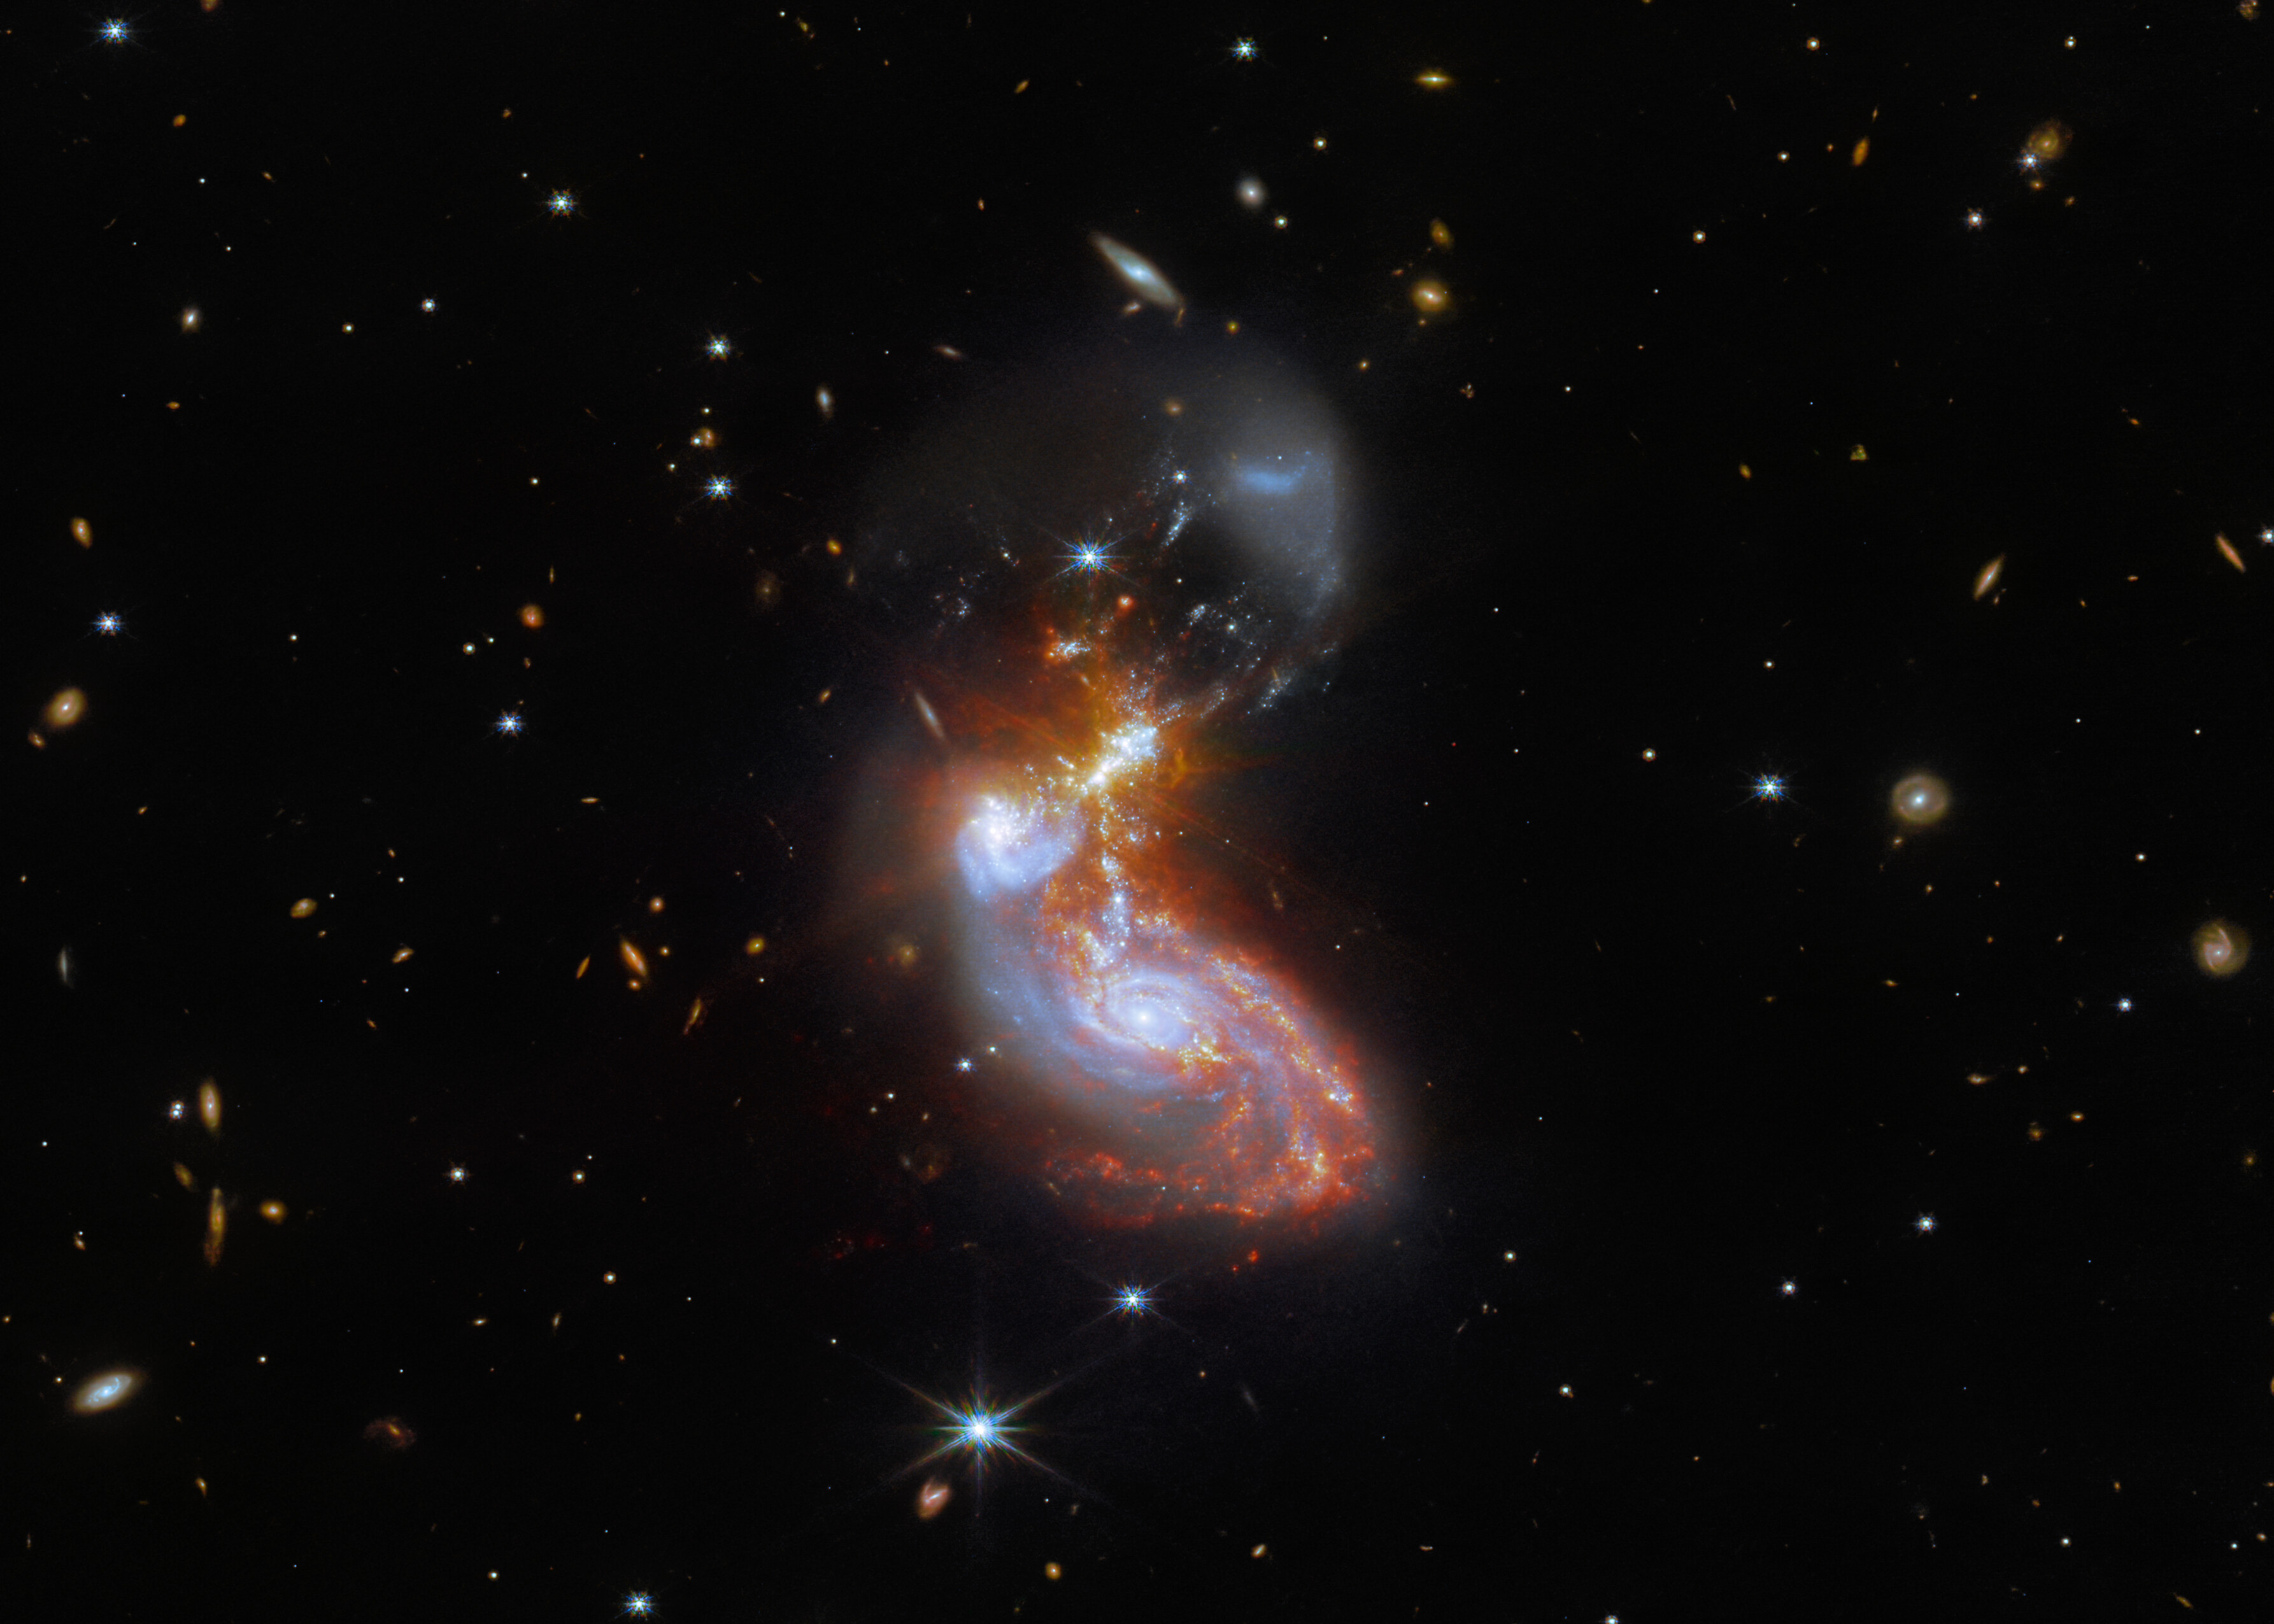 Merging Galaxy Pair IIZw096